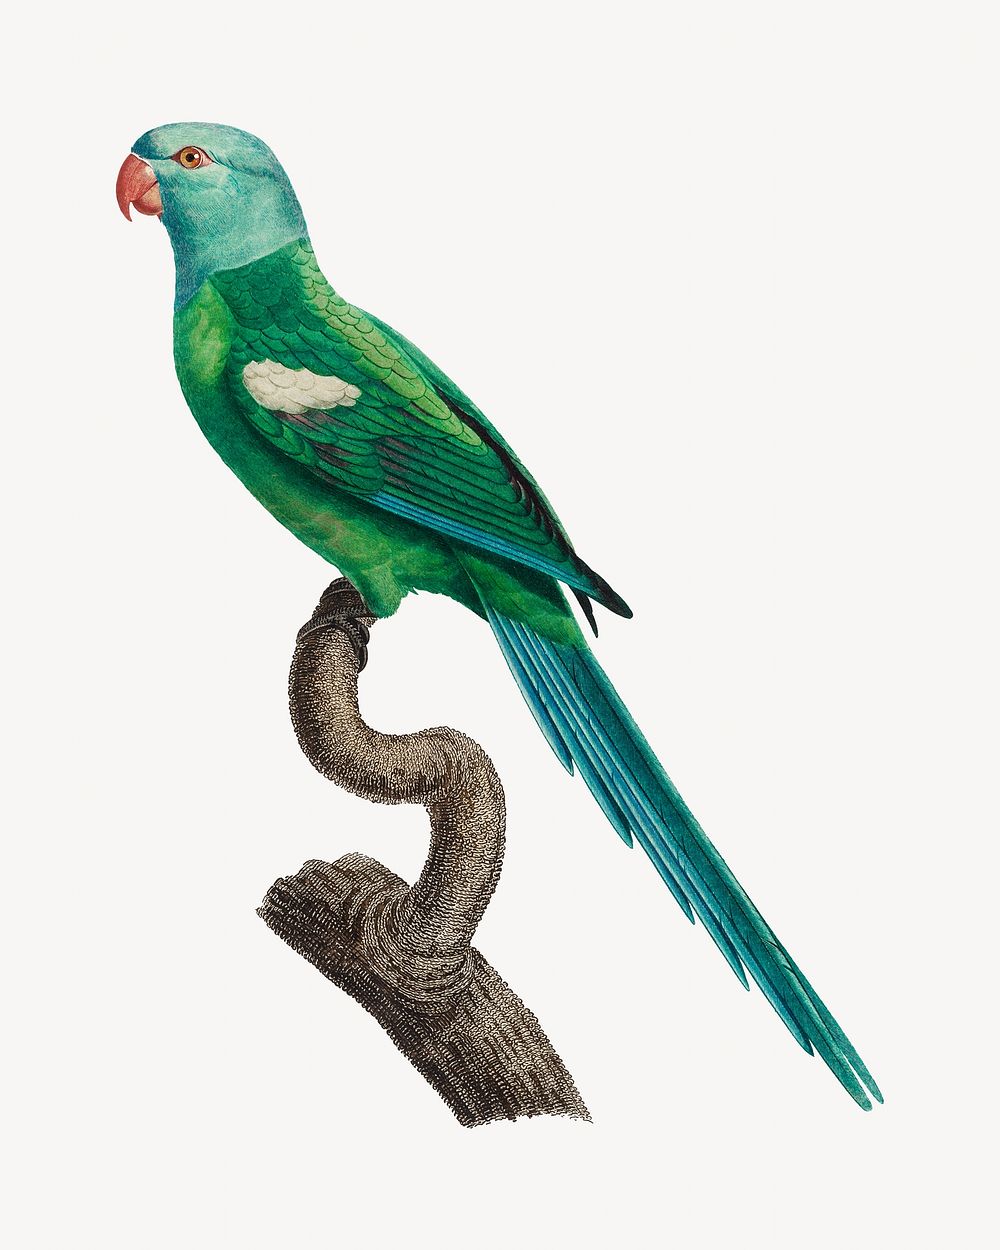 Yellow-shouldered Amazon parrot bird, vintage animal illustration